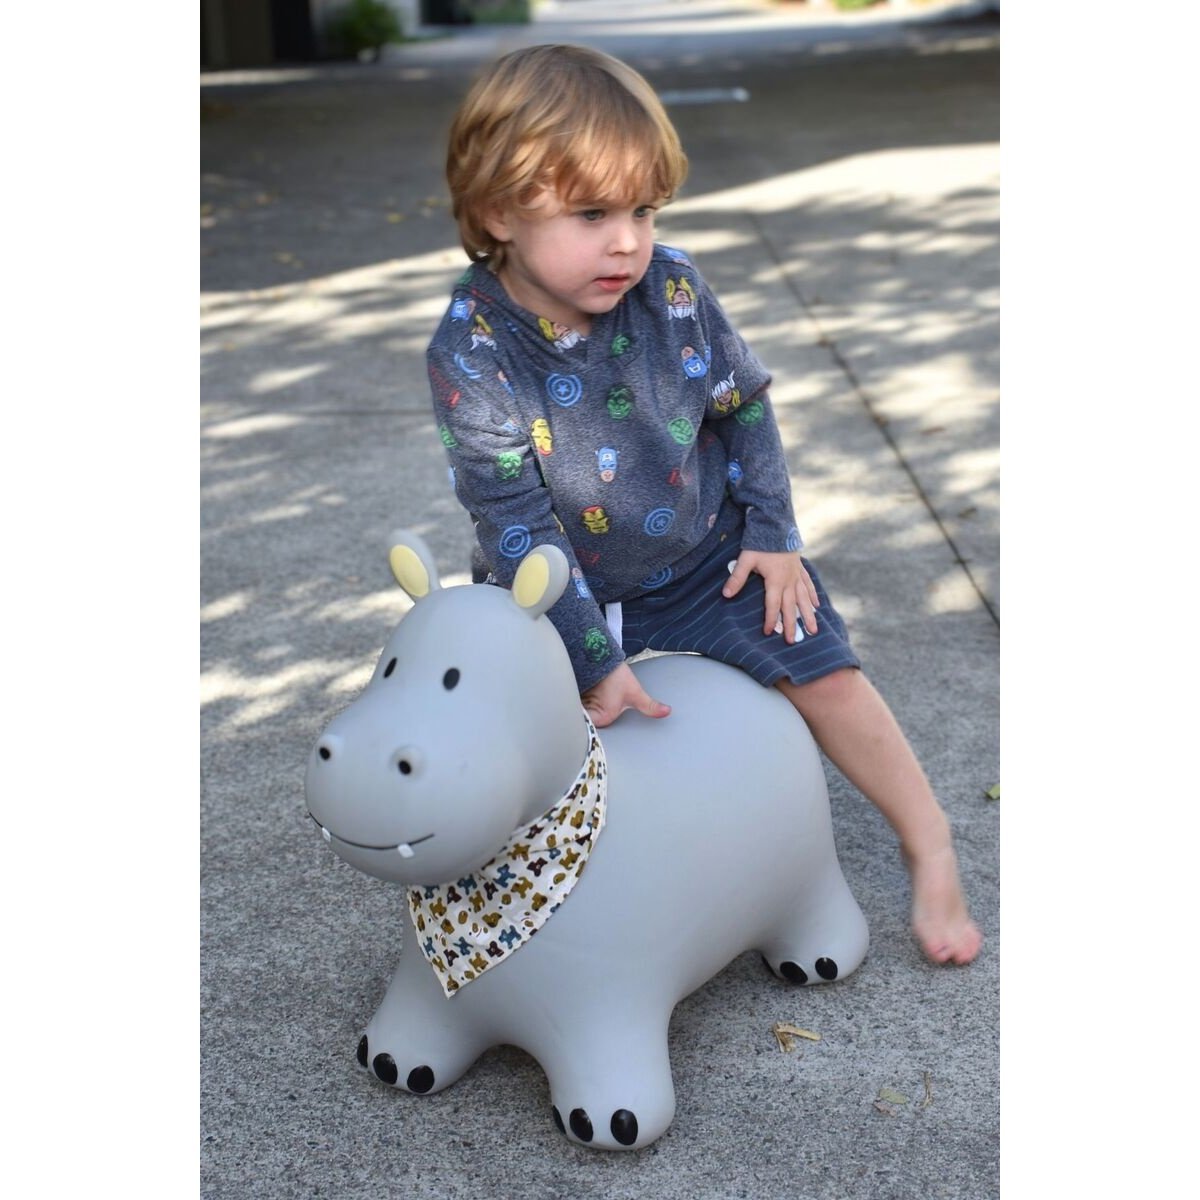 Kaper Kidz Bouncy Riders - Pebbles the Hippo - Toybox Tales